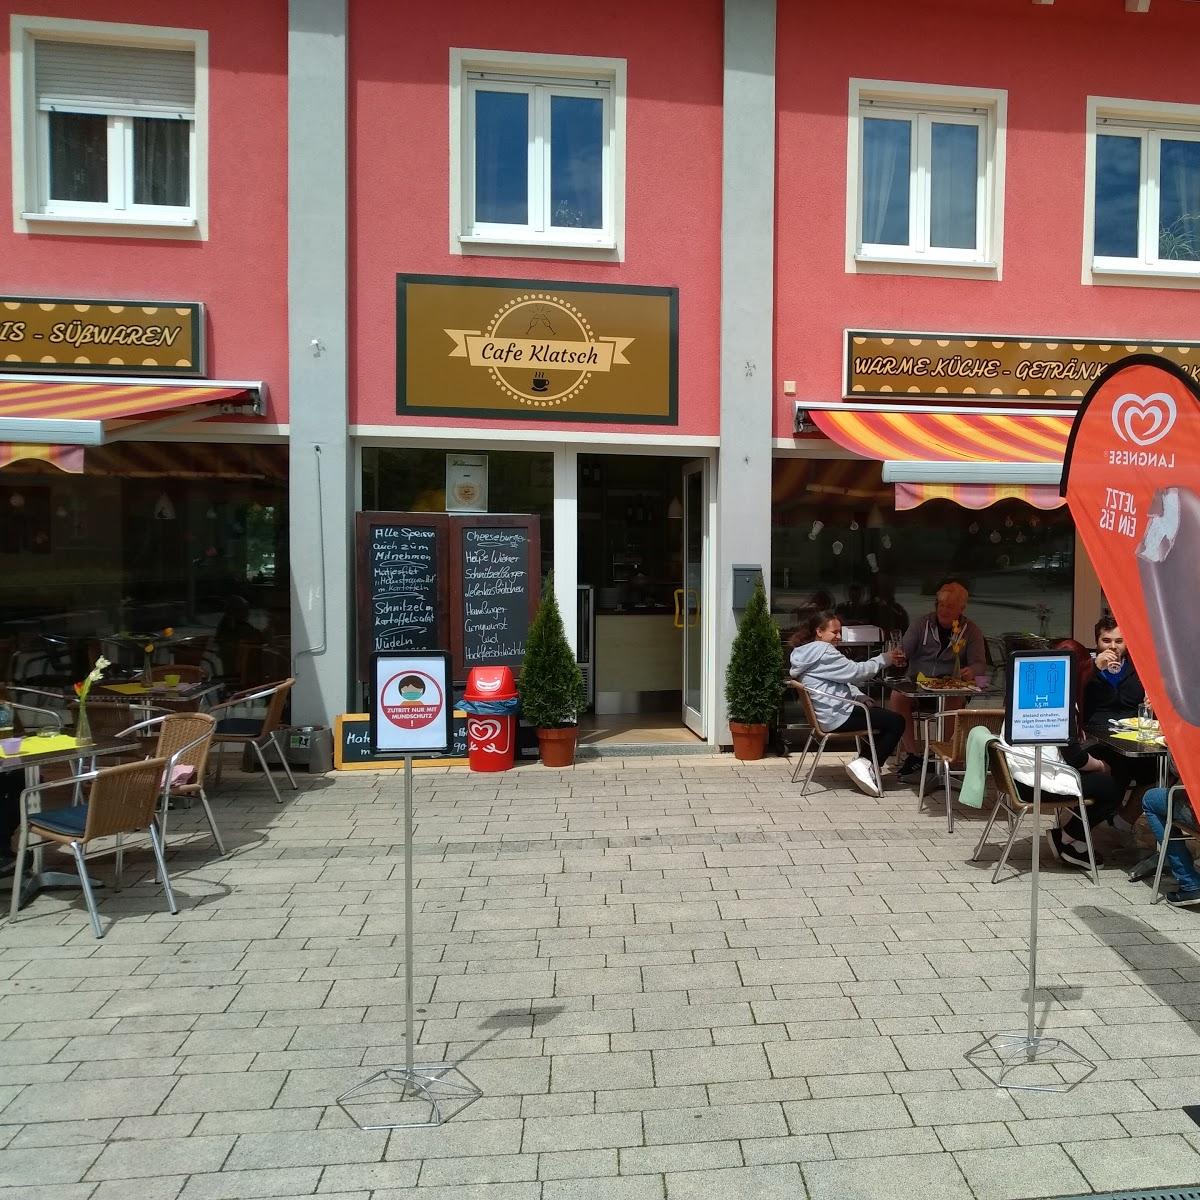 Restaurant "Café Klatsch" in Bayreuth